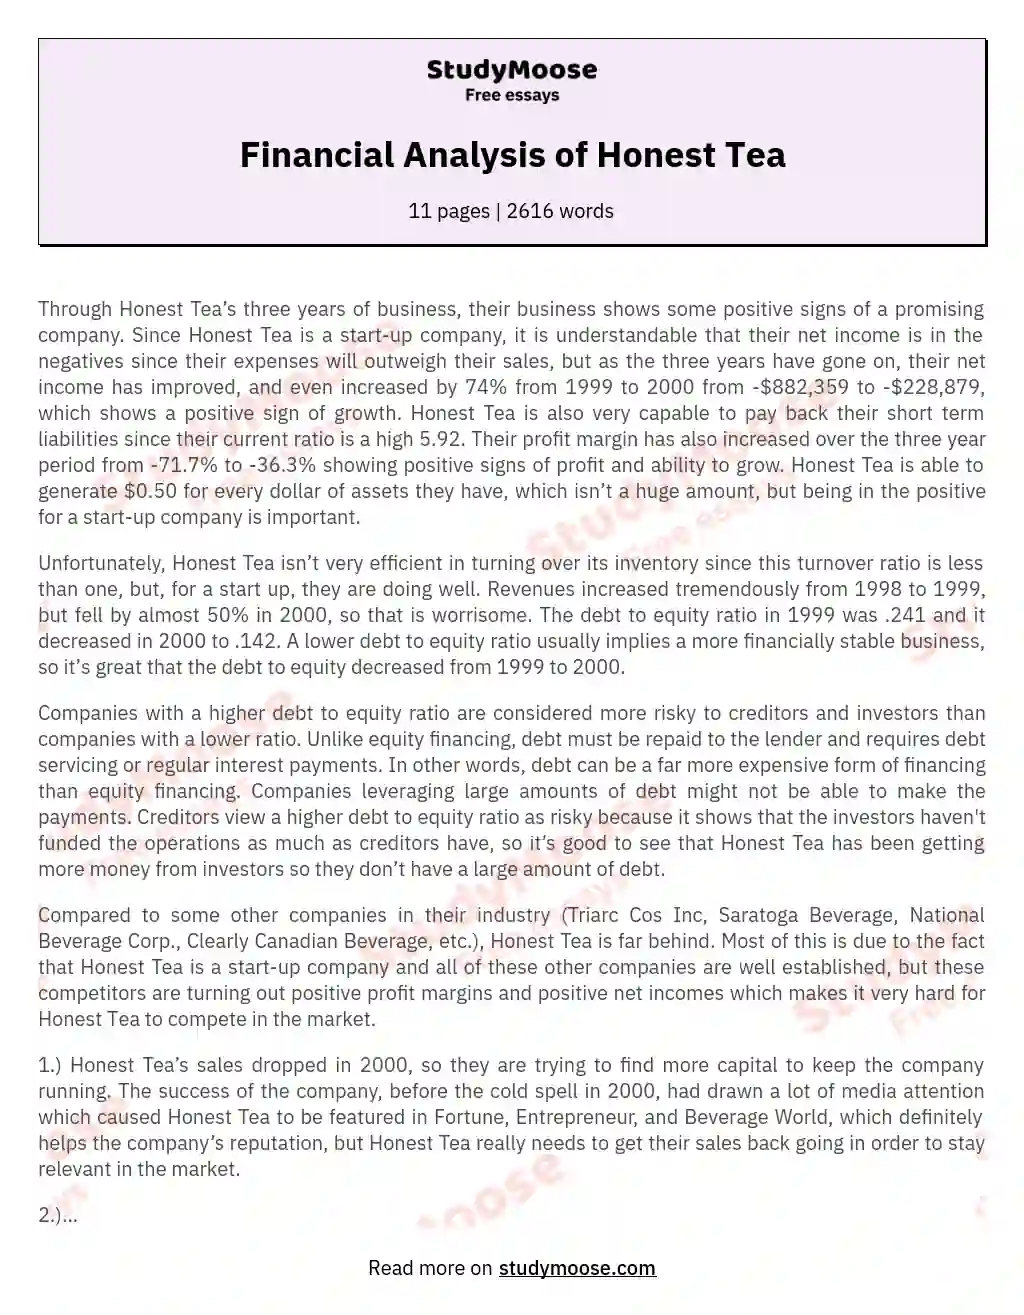 Financial Analysis of Honest Tea essay